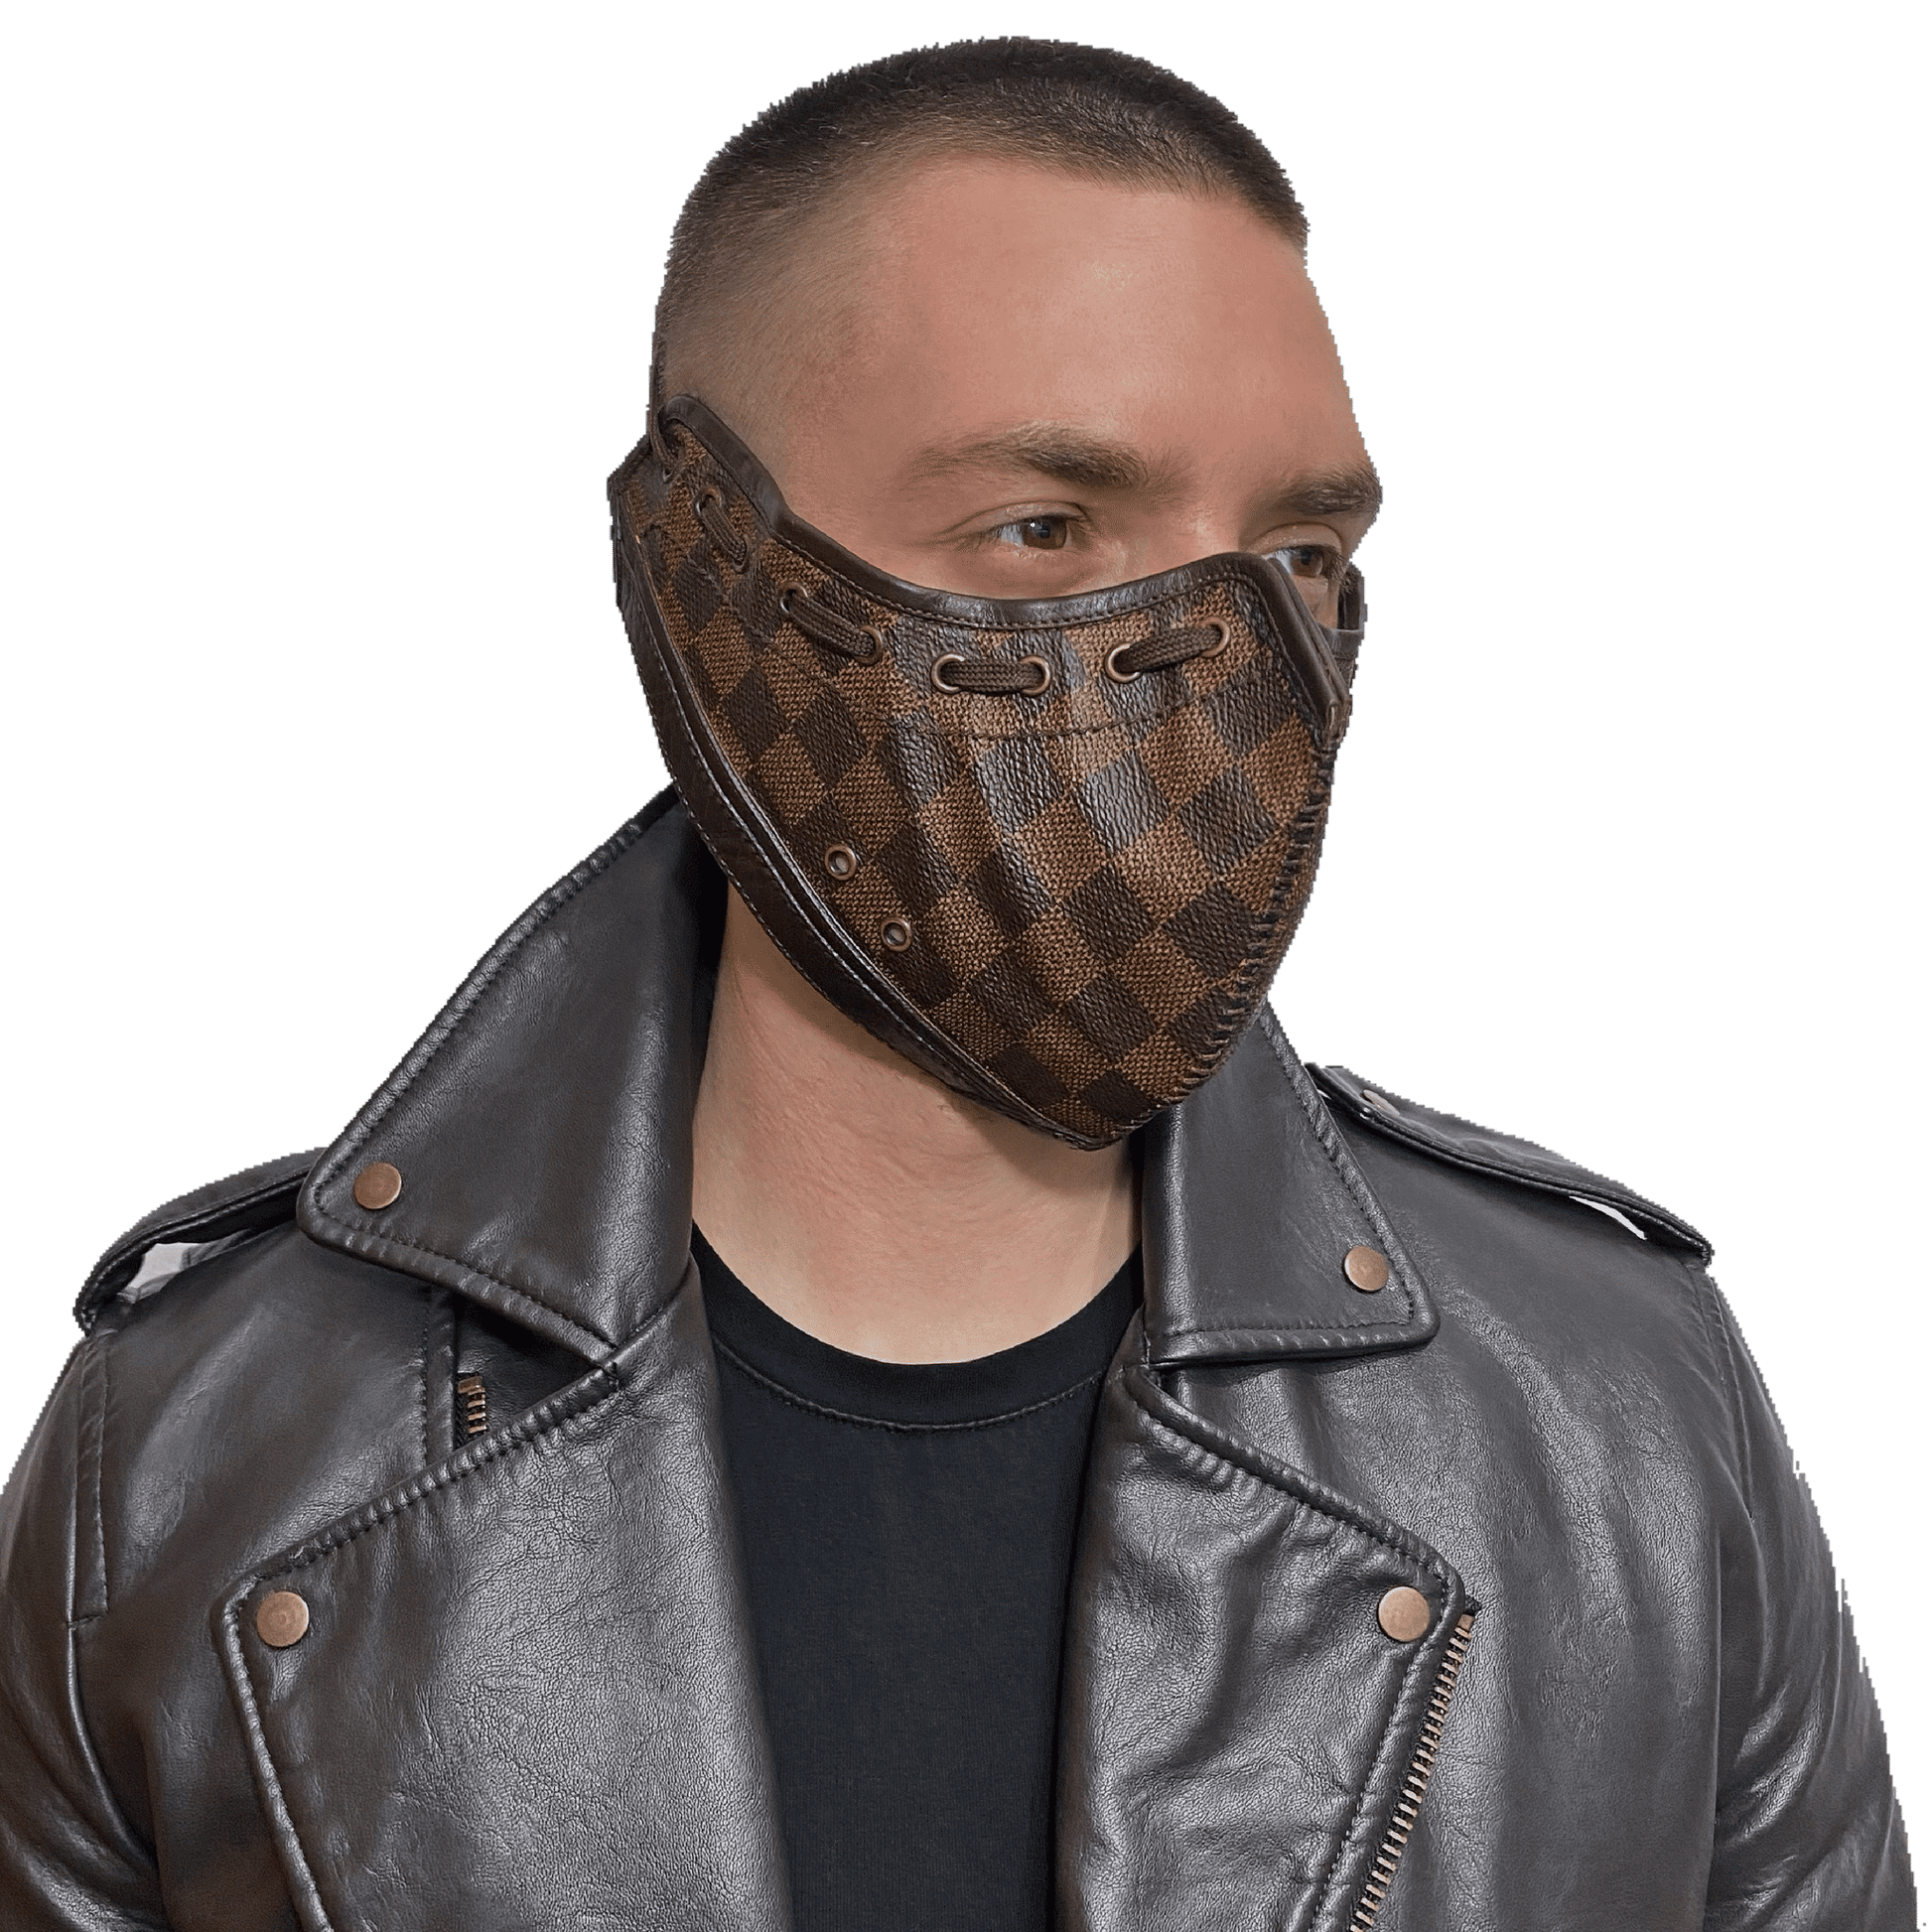 Lv Leather Fancy Face Mask N95